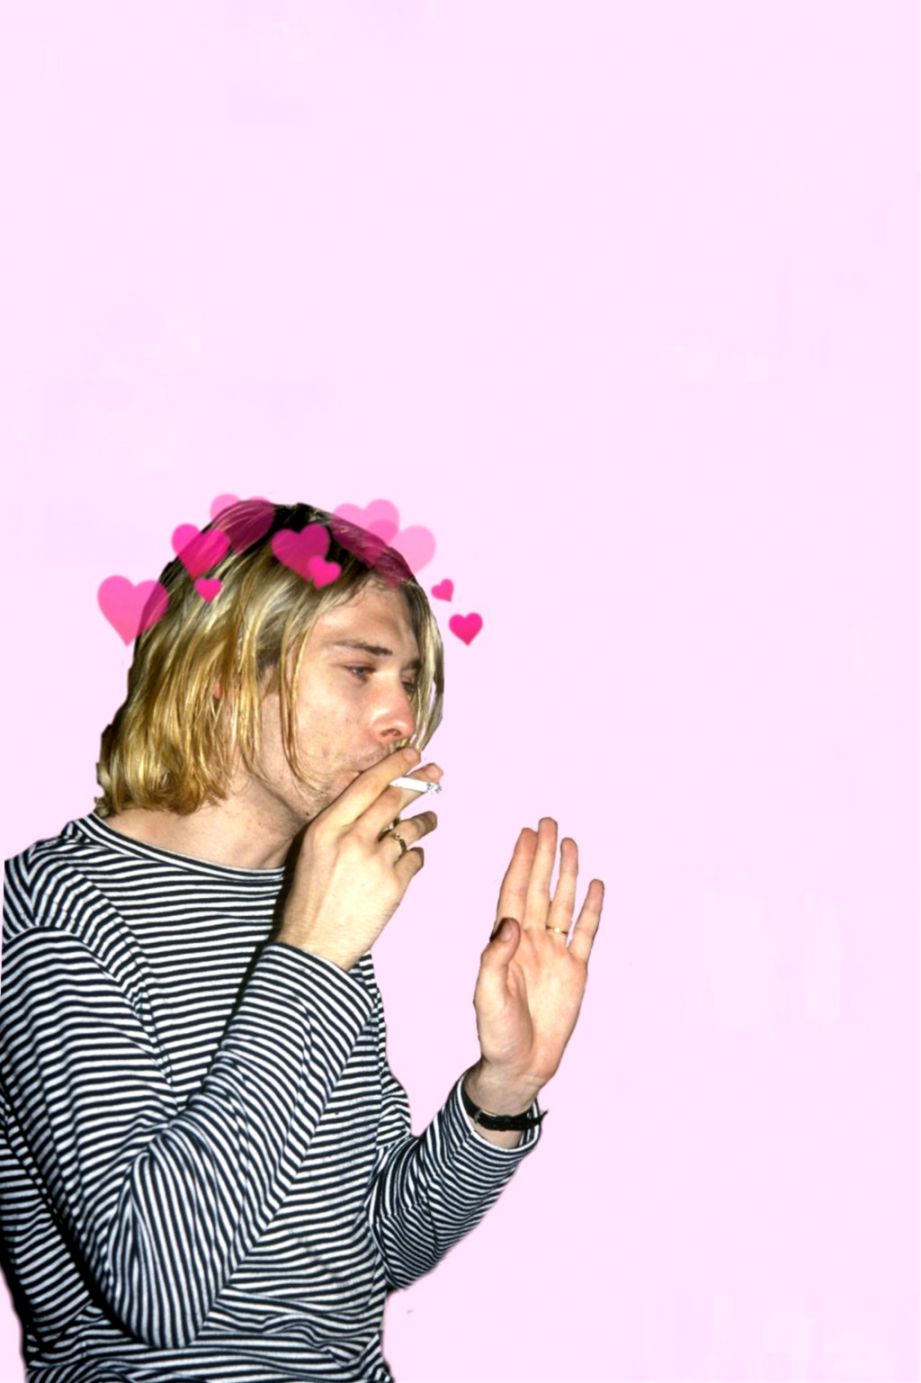 Kurtcobain Kurt Courtneykilledkurt Tumblr Nirvana - Kurt Cobain Wallpaper Aesthetic - HD Wallpaper 